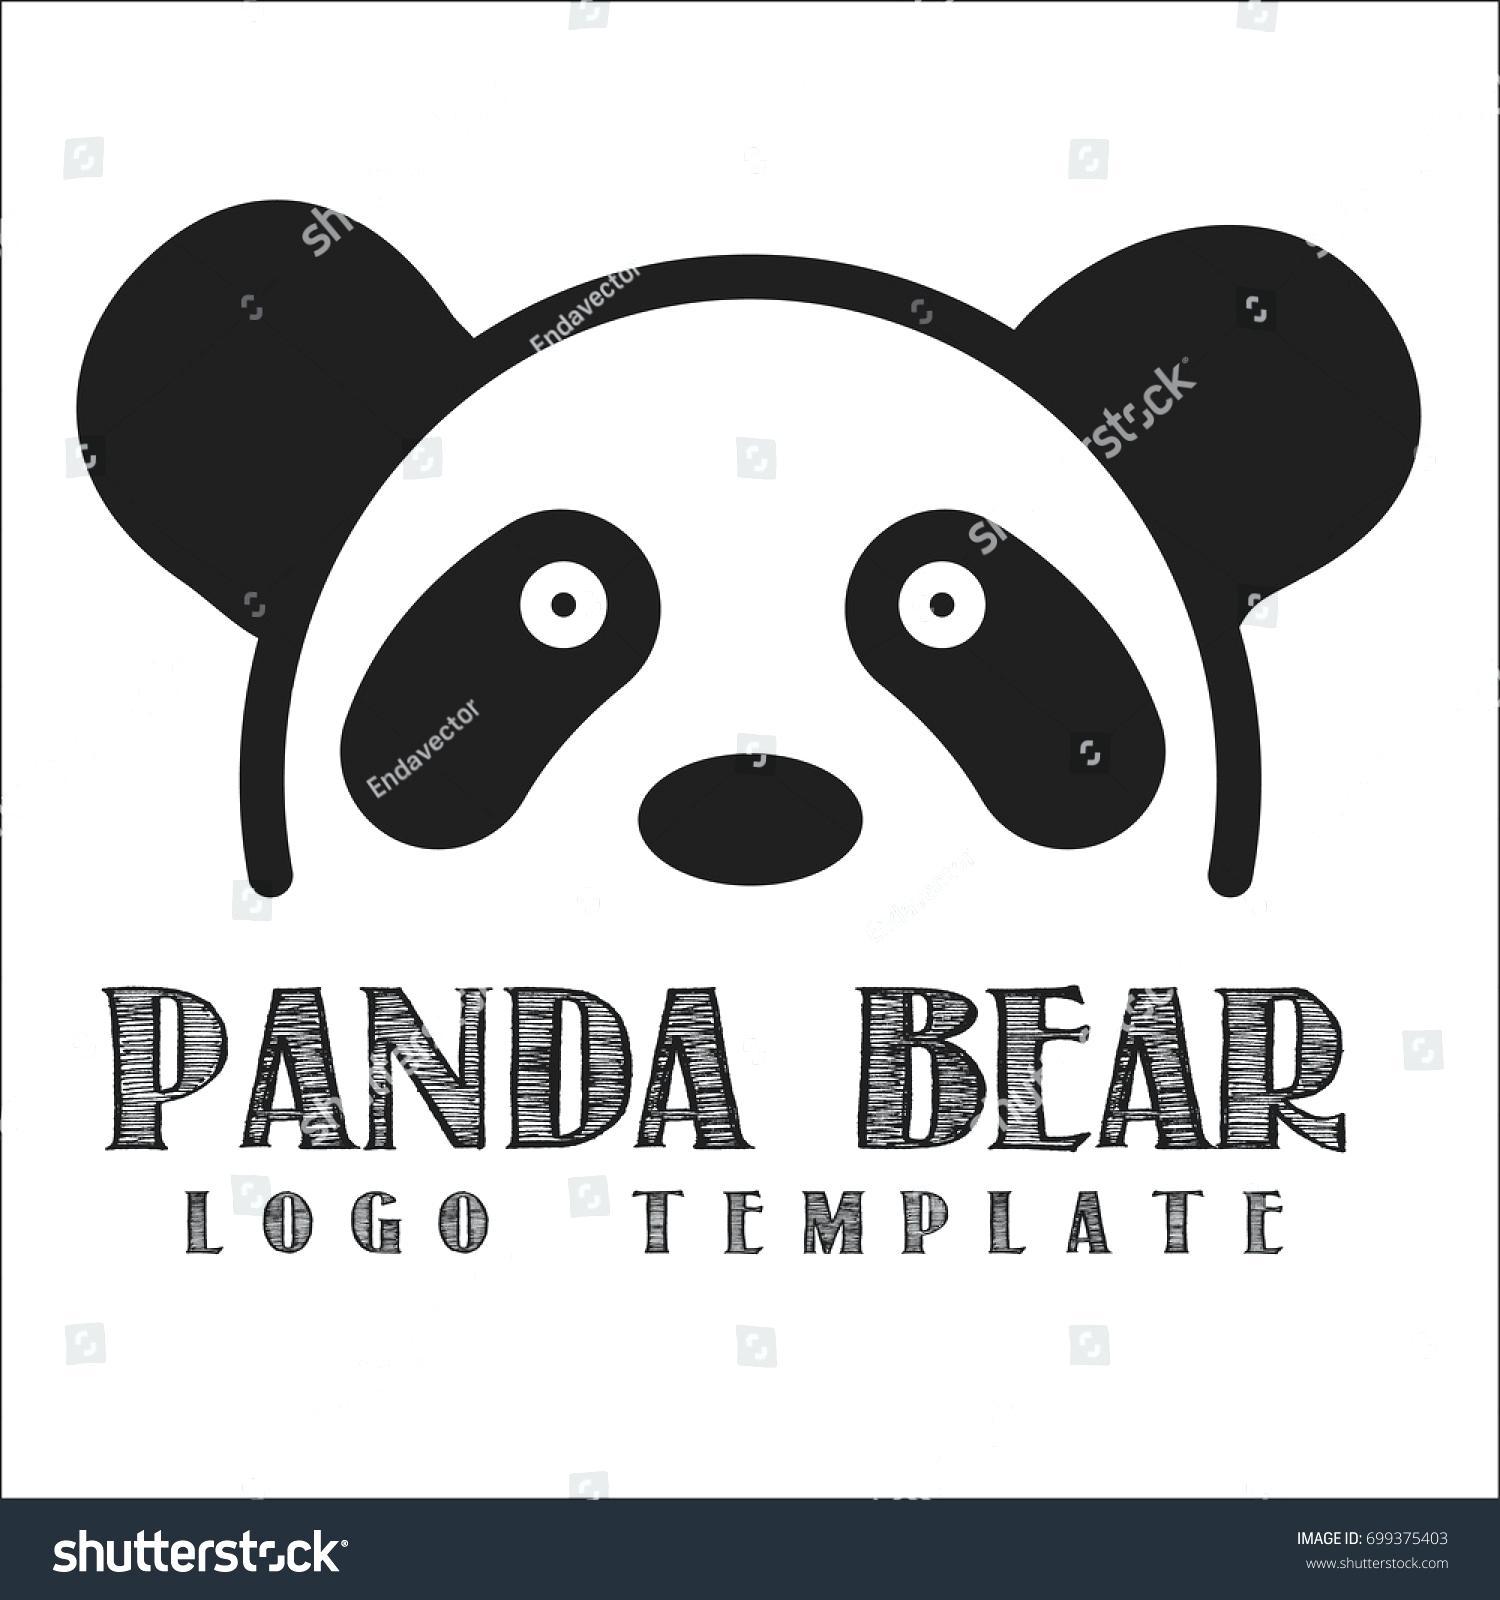 Panda Bear Logo - template: Panda Bear Template Vector Of Fun Children Isolated Geek